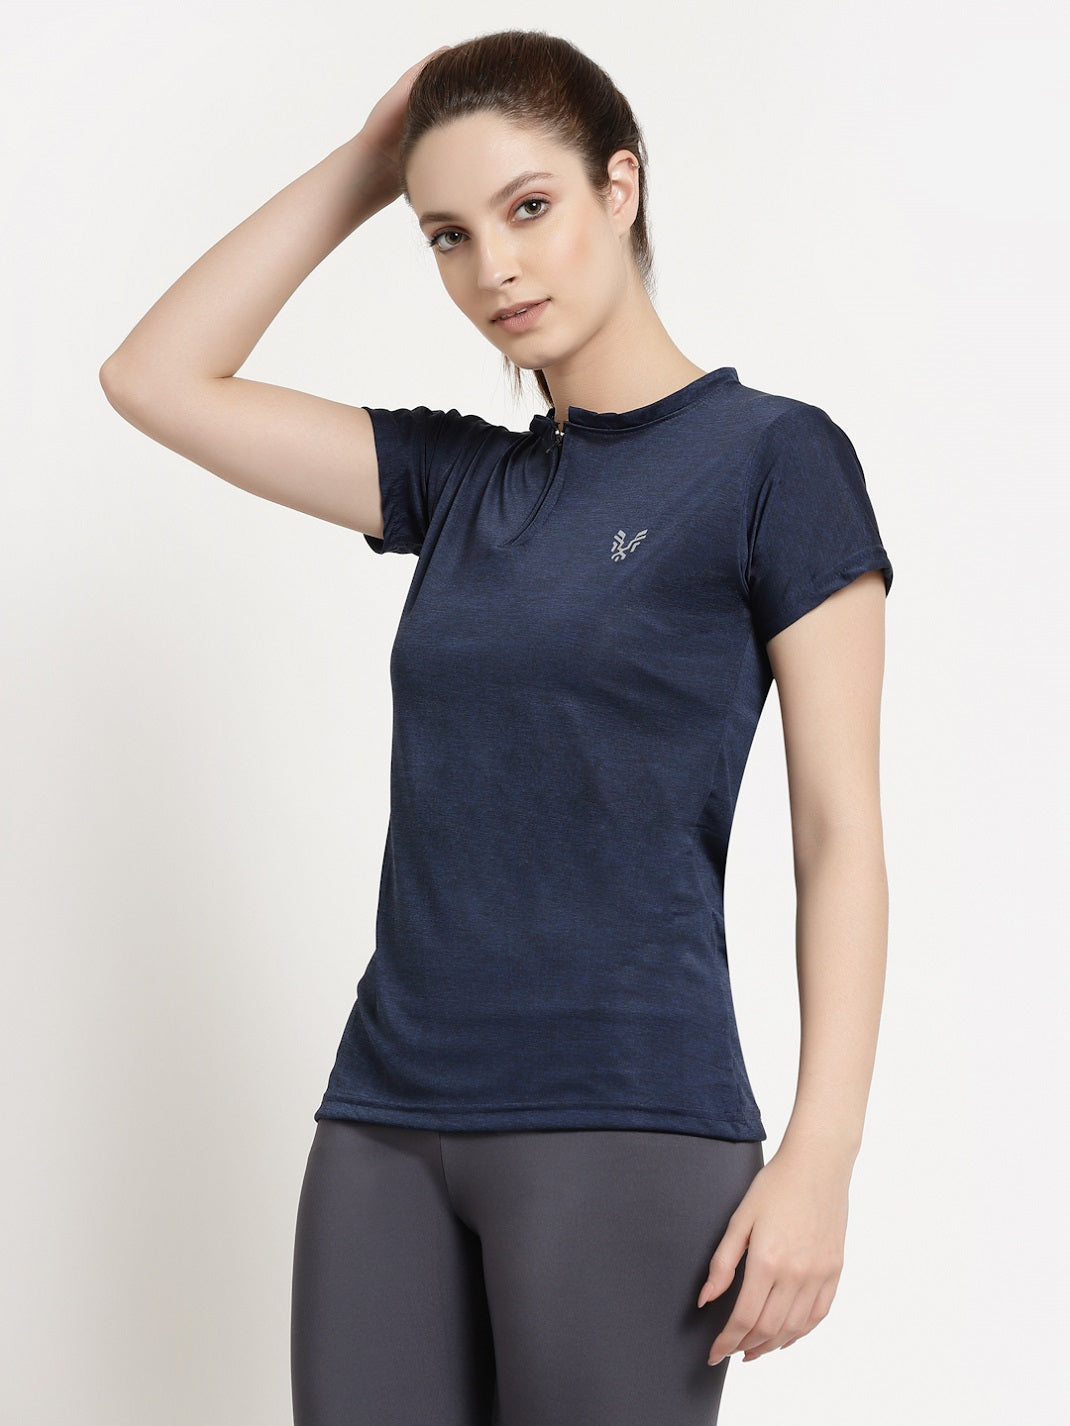 UZARUS Women's Half Sleeves Sports Gym T-Shirt